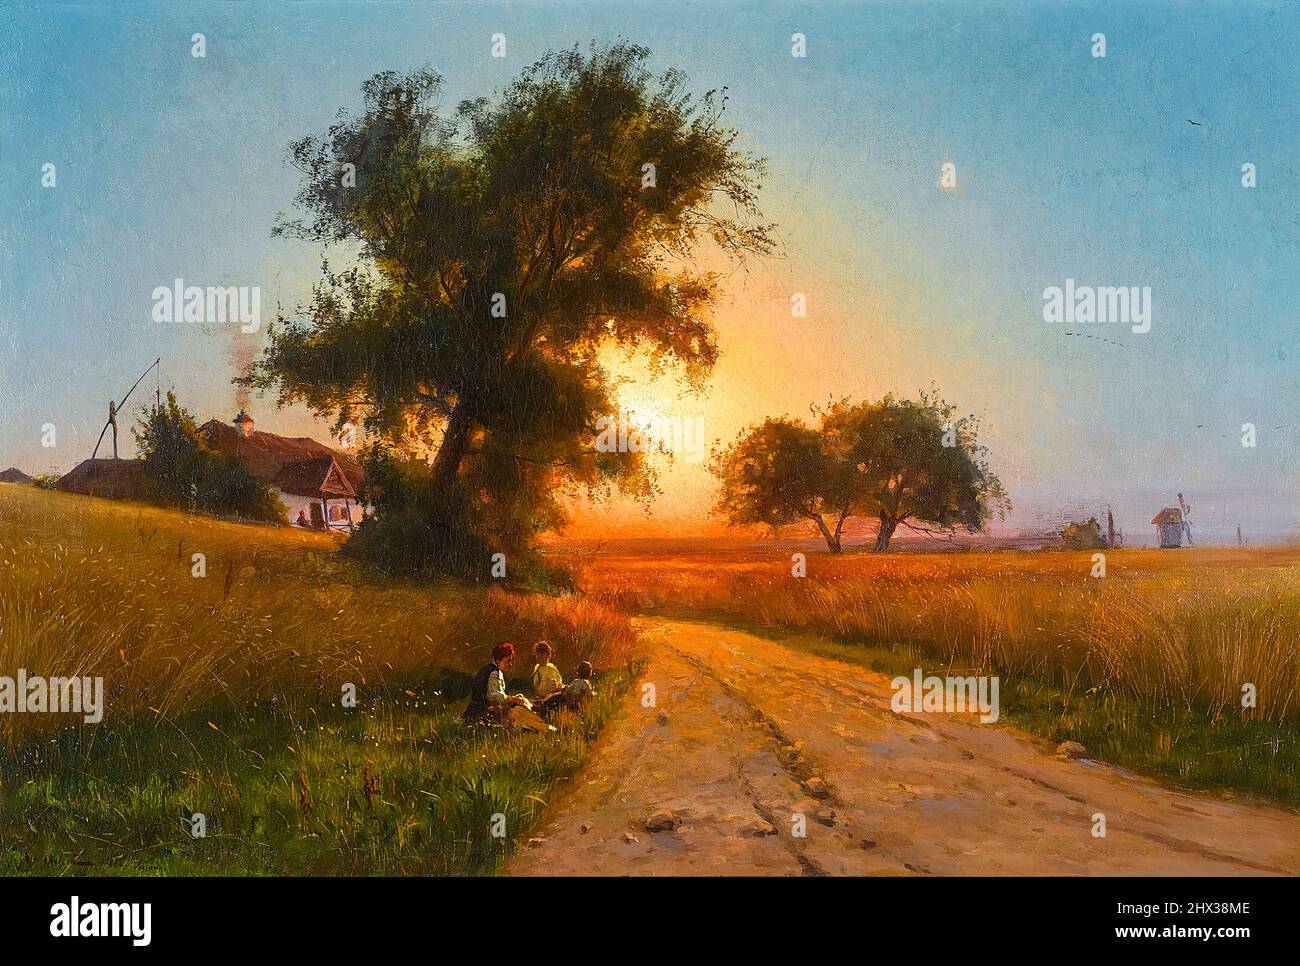 On a Late Summer's Evening, Ukraine, oil on canvas landscape painting by Iosif Evstafevich Krachkovsky, 1888 Stock Photo